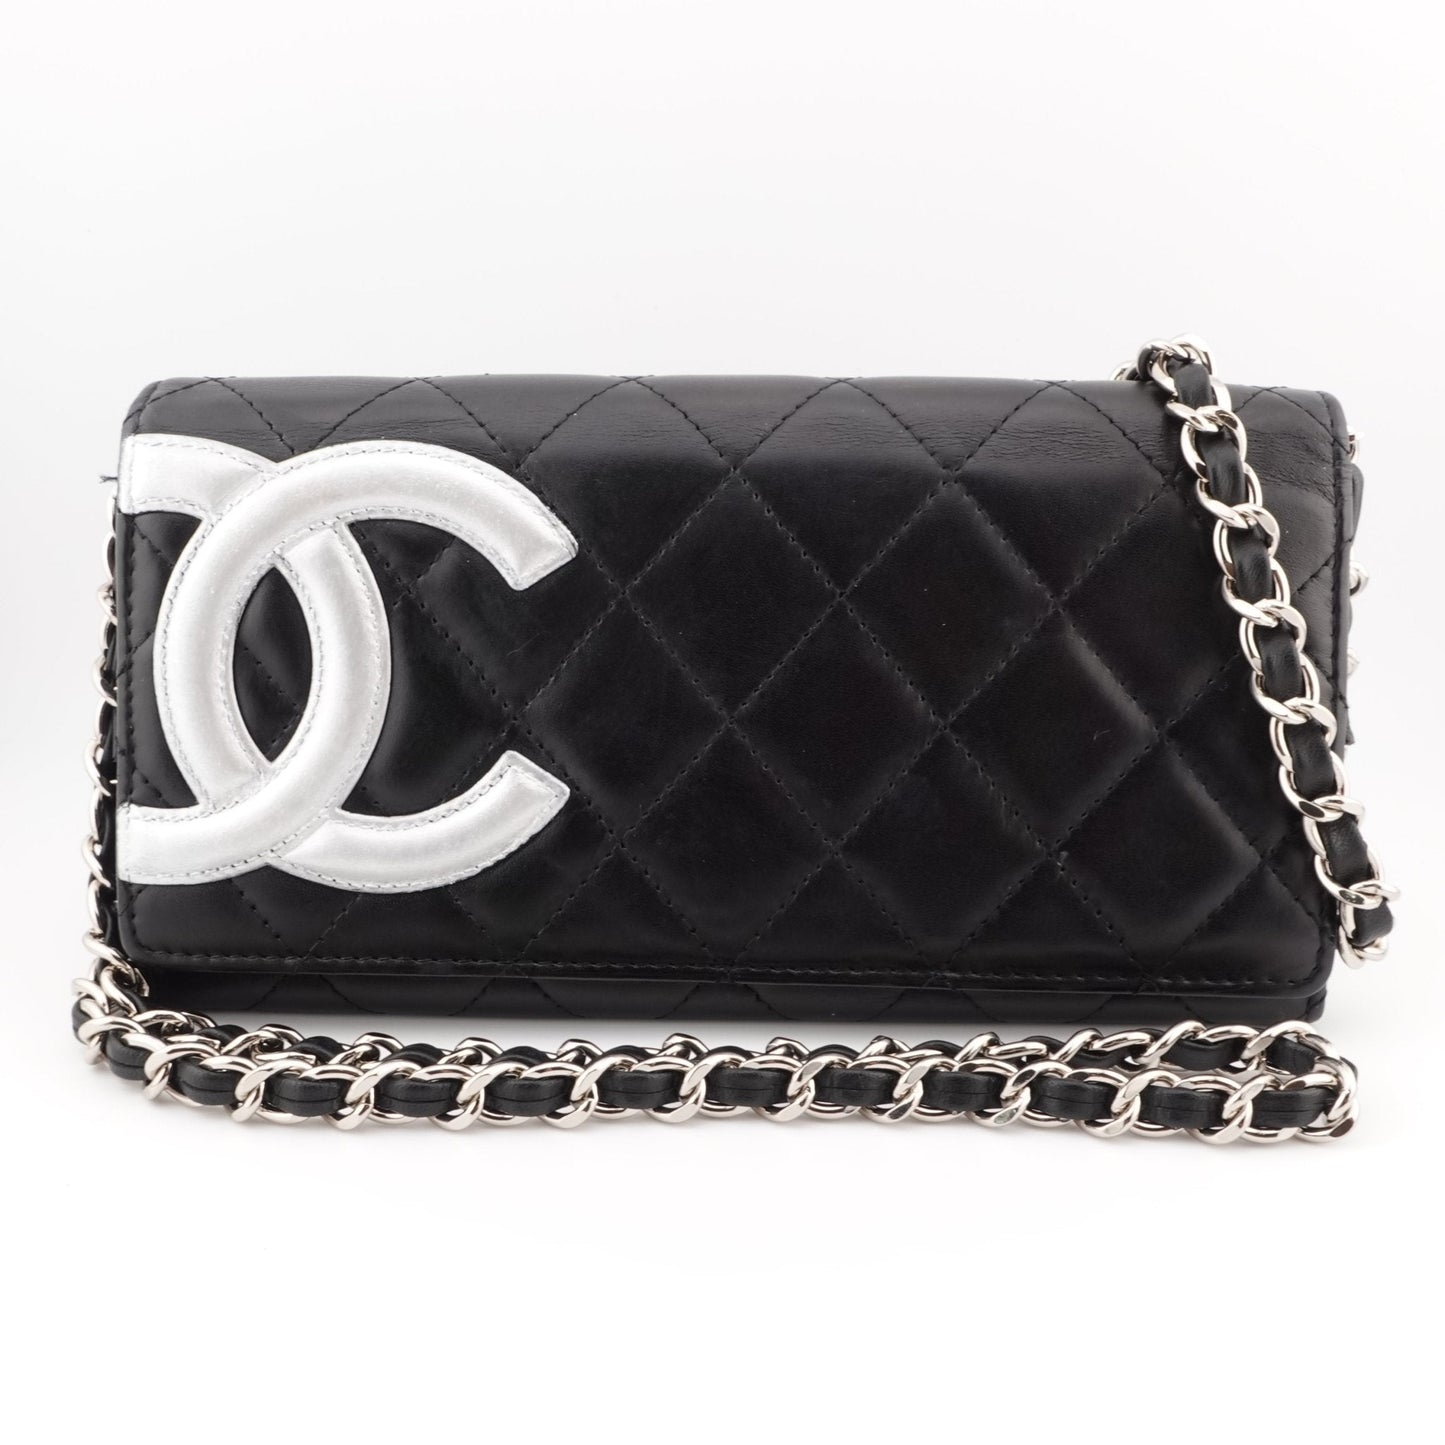 CHANEL Lambskin Cambon Full Flap Wallet on Chain - Bag Envy